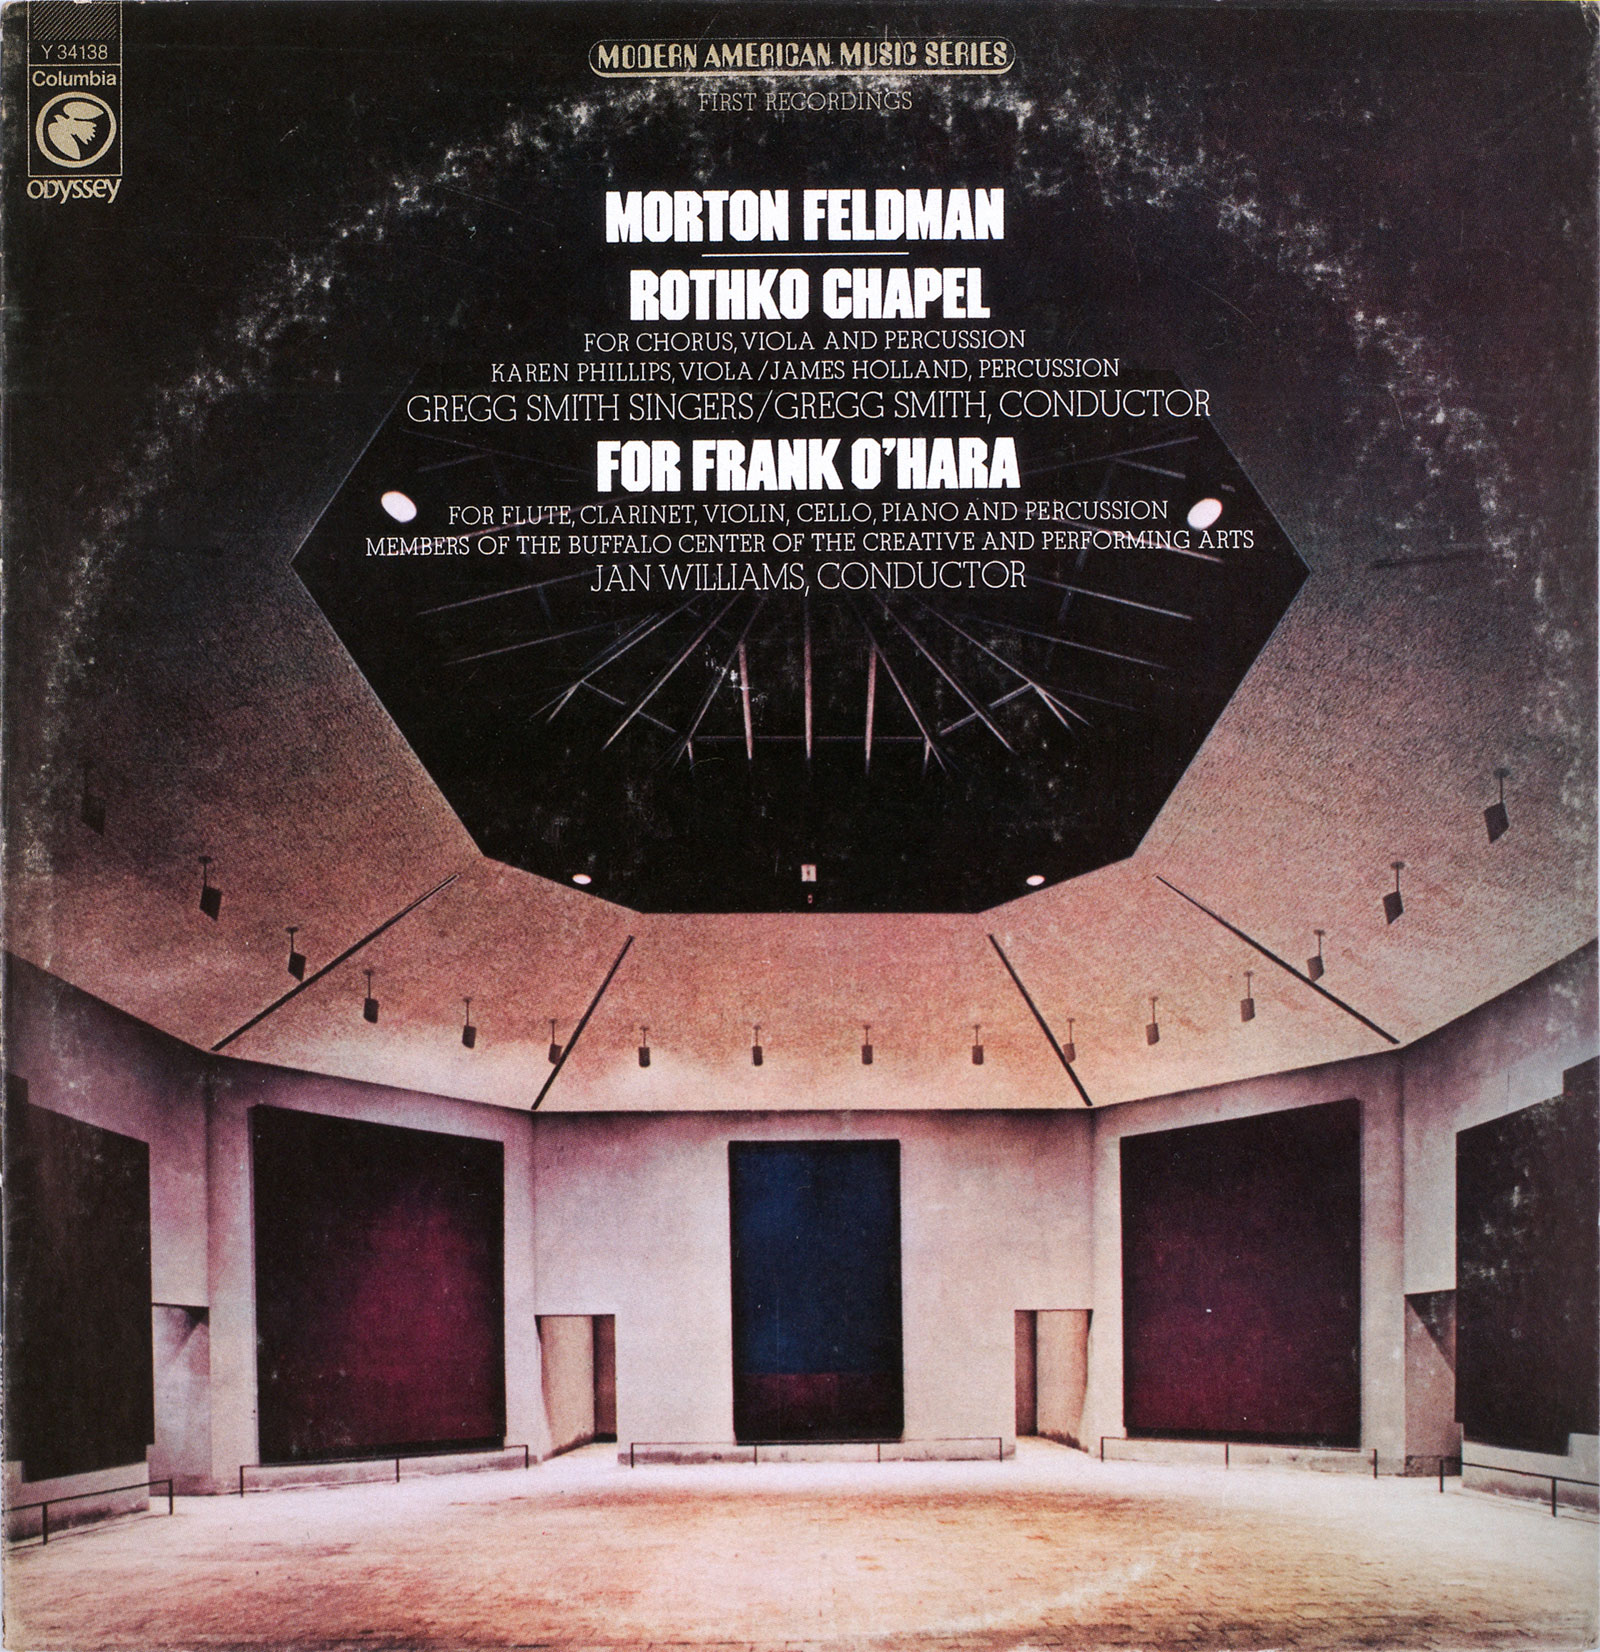 An album cover for Morton Feldman’s nineteen seventy-nine record titled “Rothko Chapel, For Frank O’Hara.”